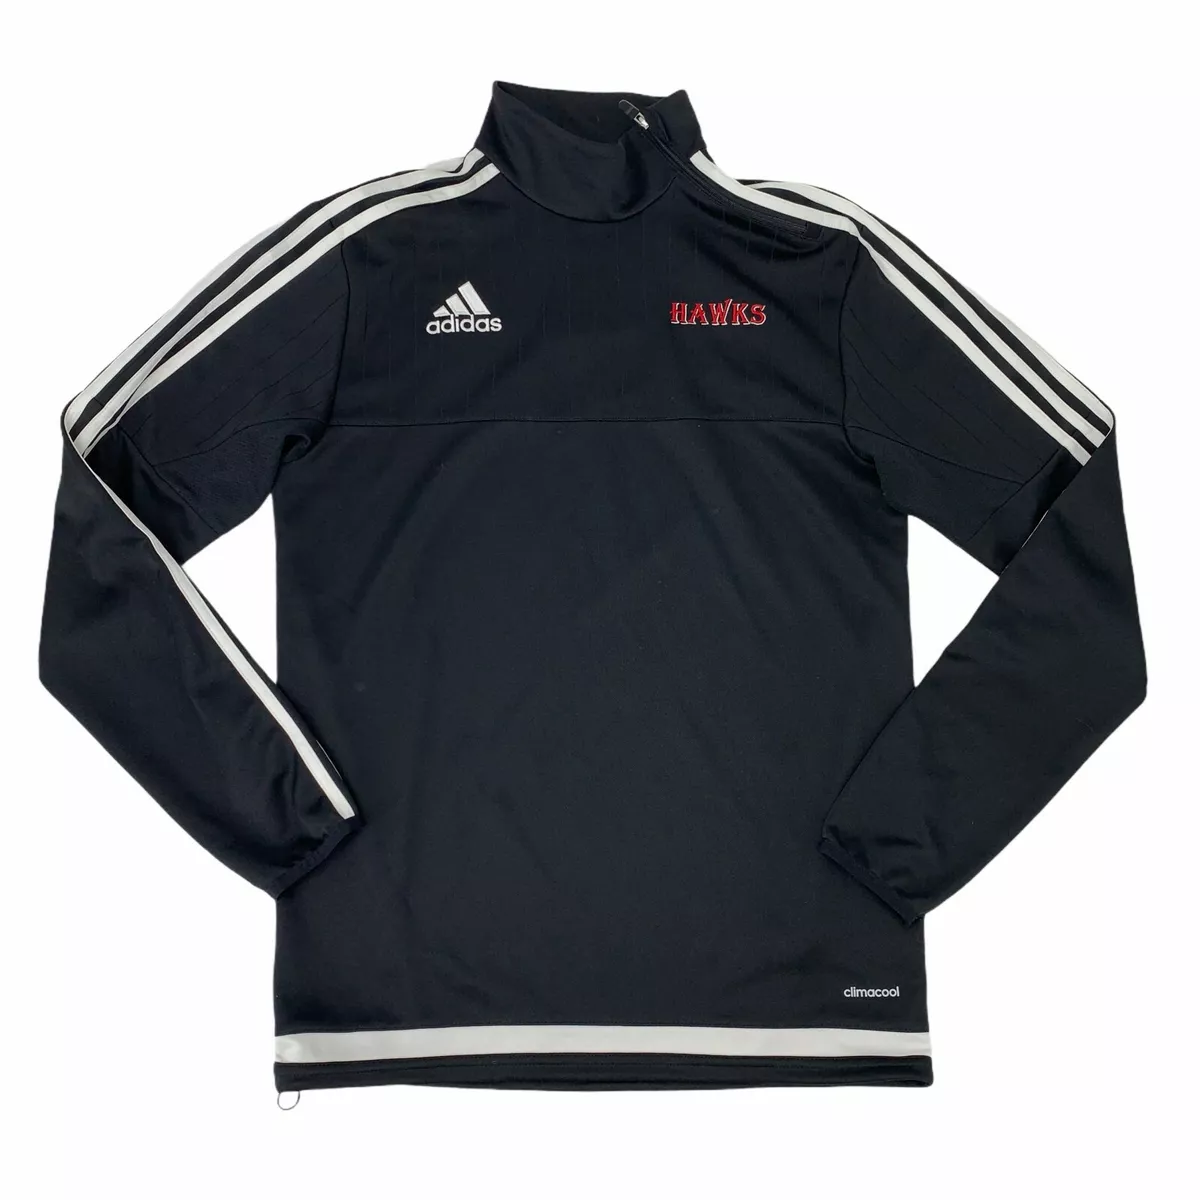 Hawks Adidas Training Shirt Mens Size S Tiro 15 Side Neck Zip Athletic eBay